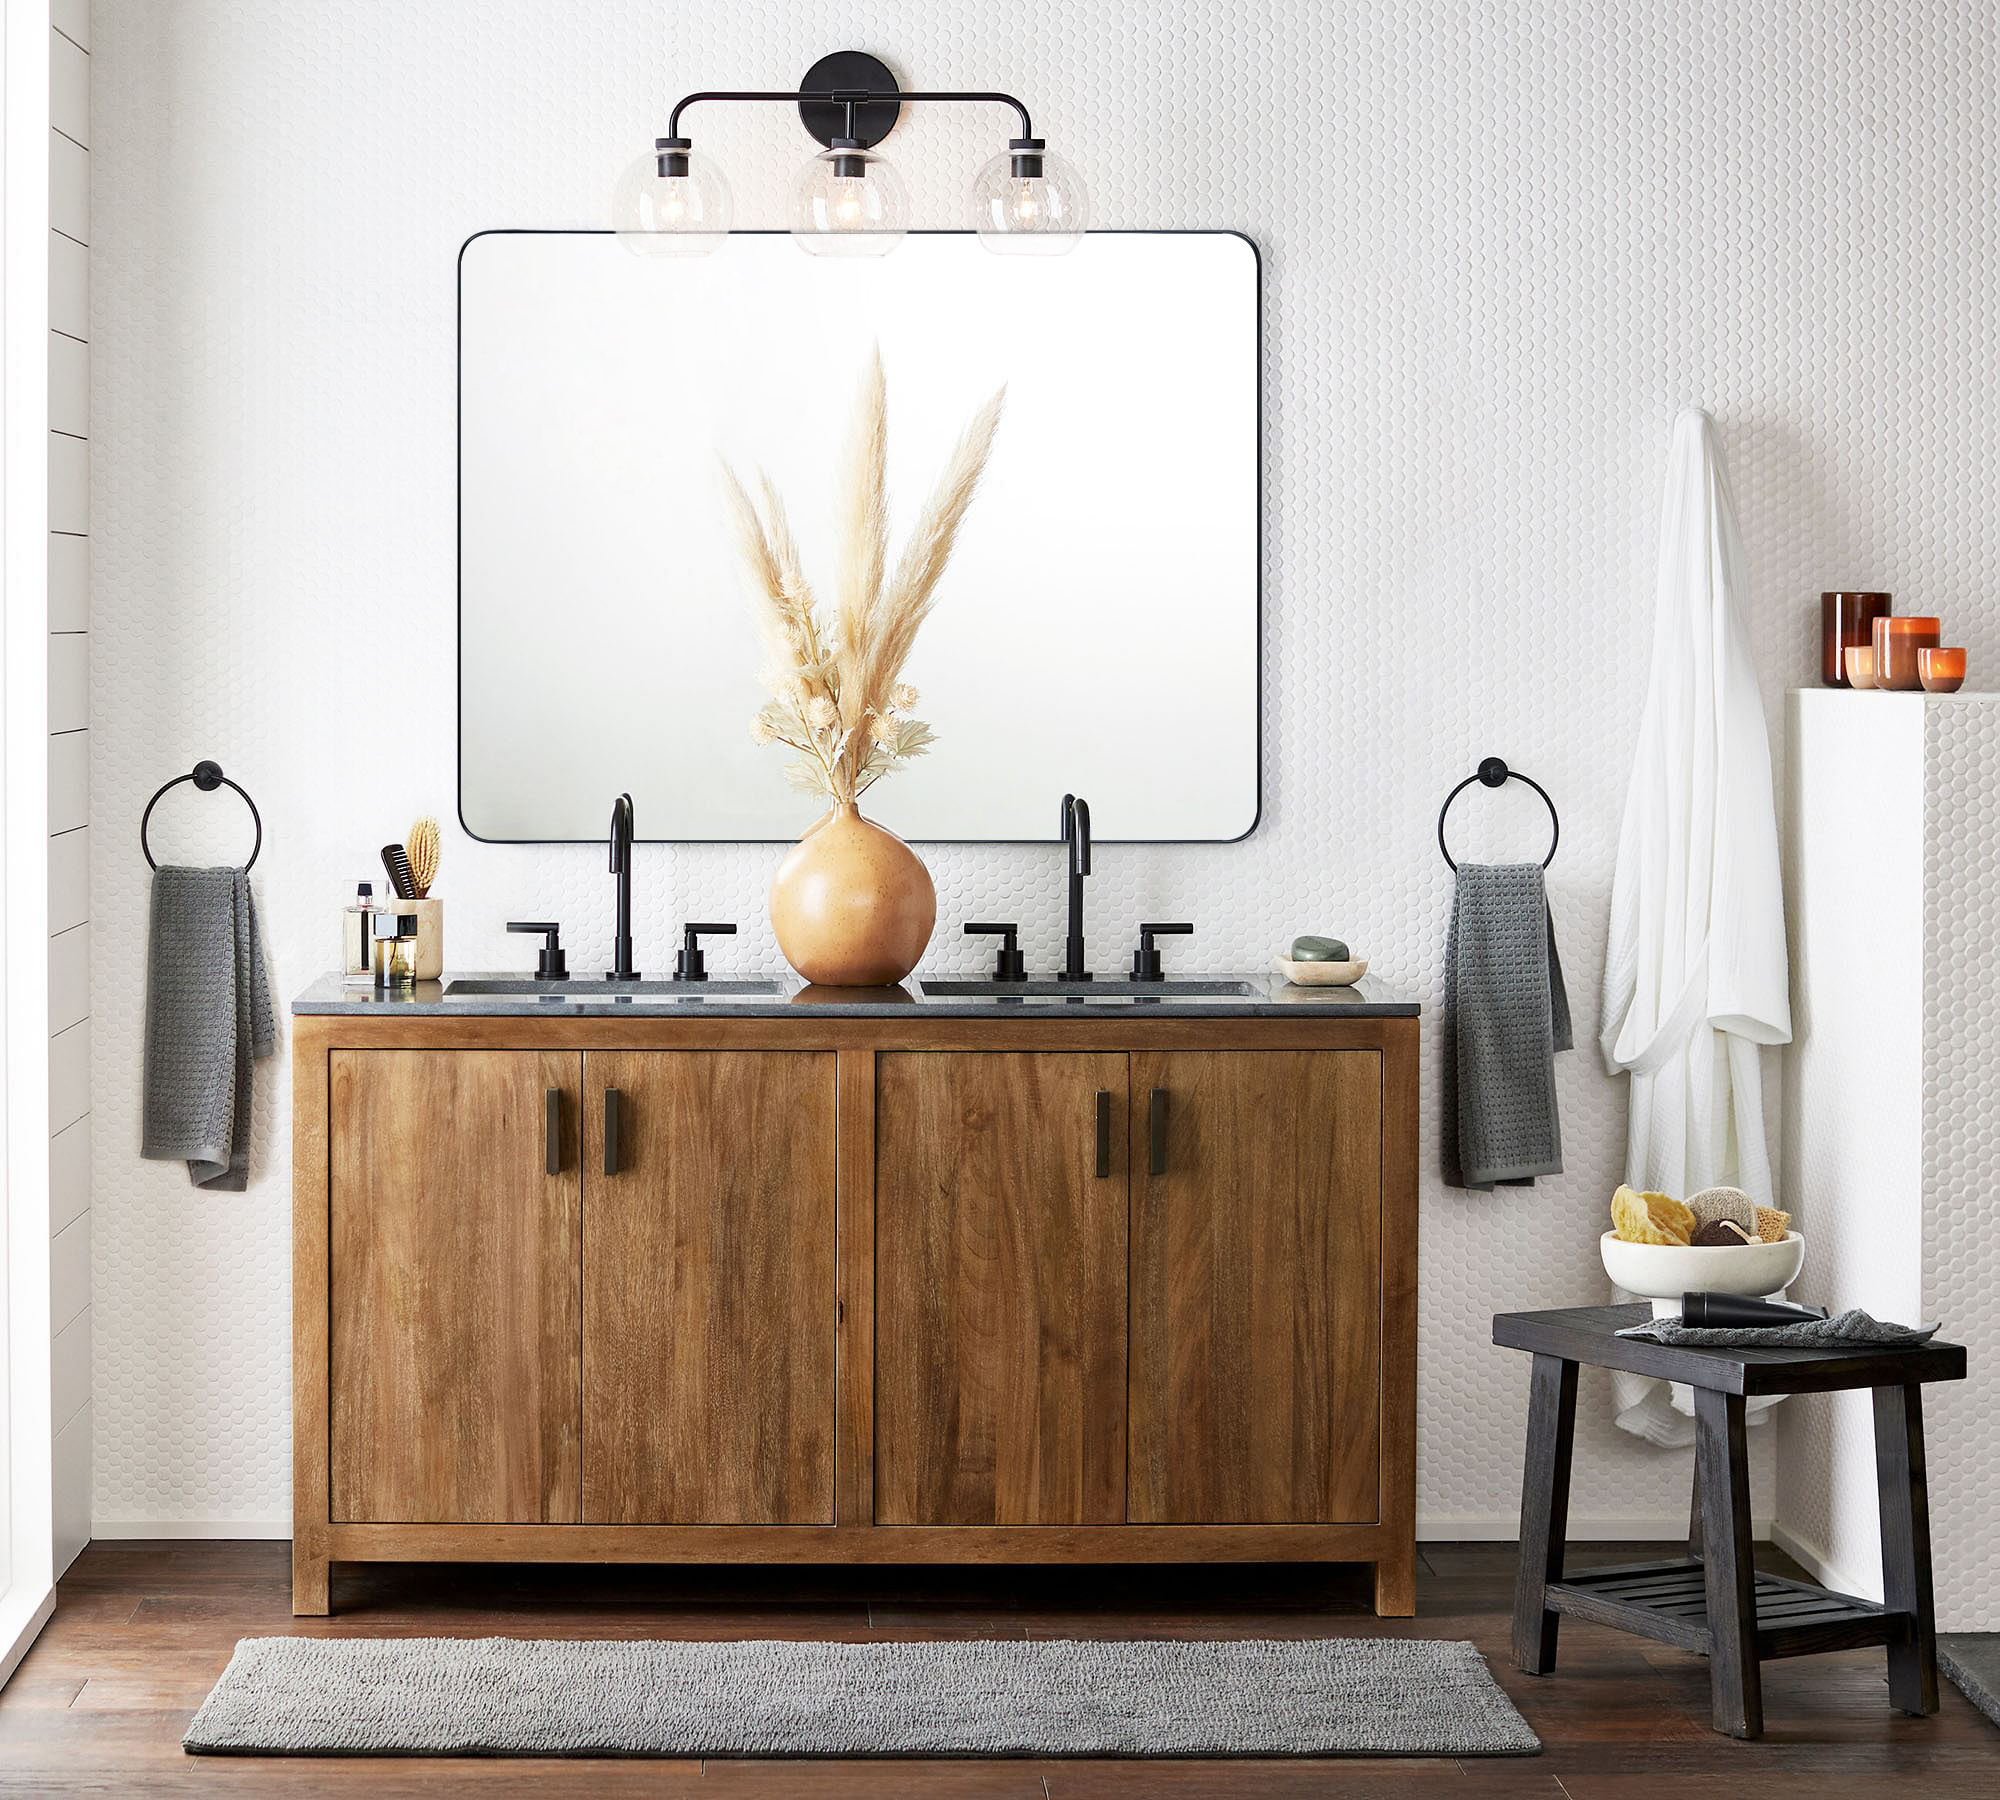 Kengston Modern & Contemporary Rectangular Bathroom Vanity Mirrors-30x48-Brushed Nickel